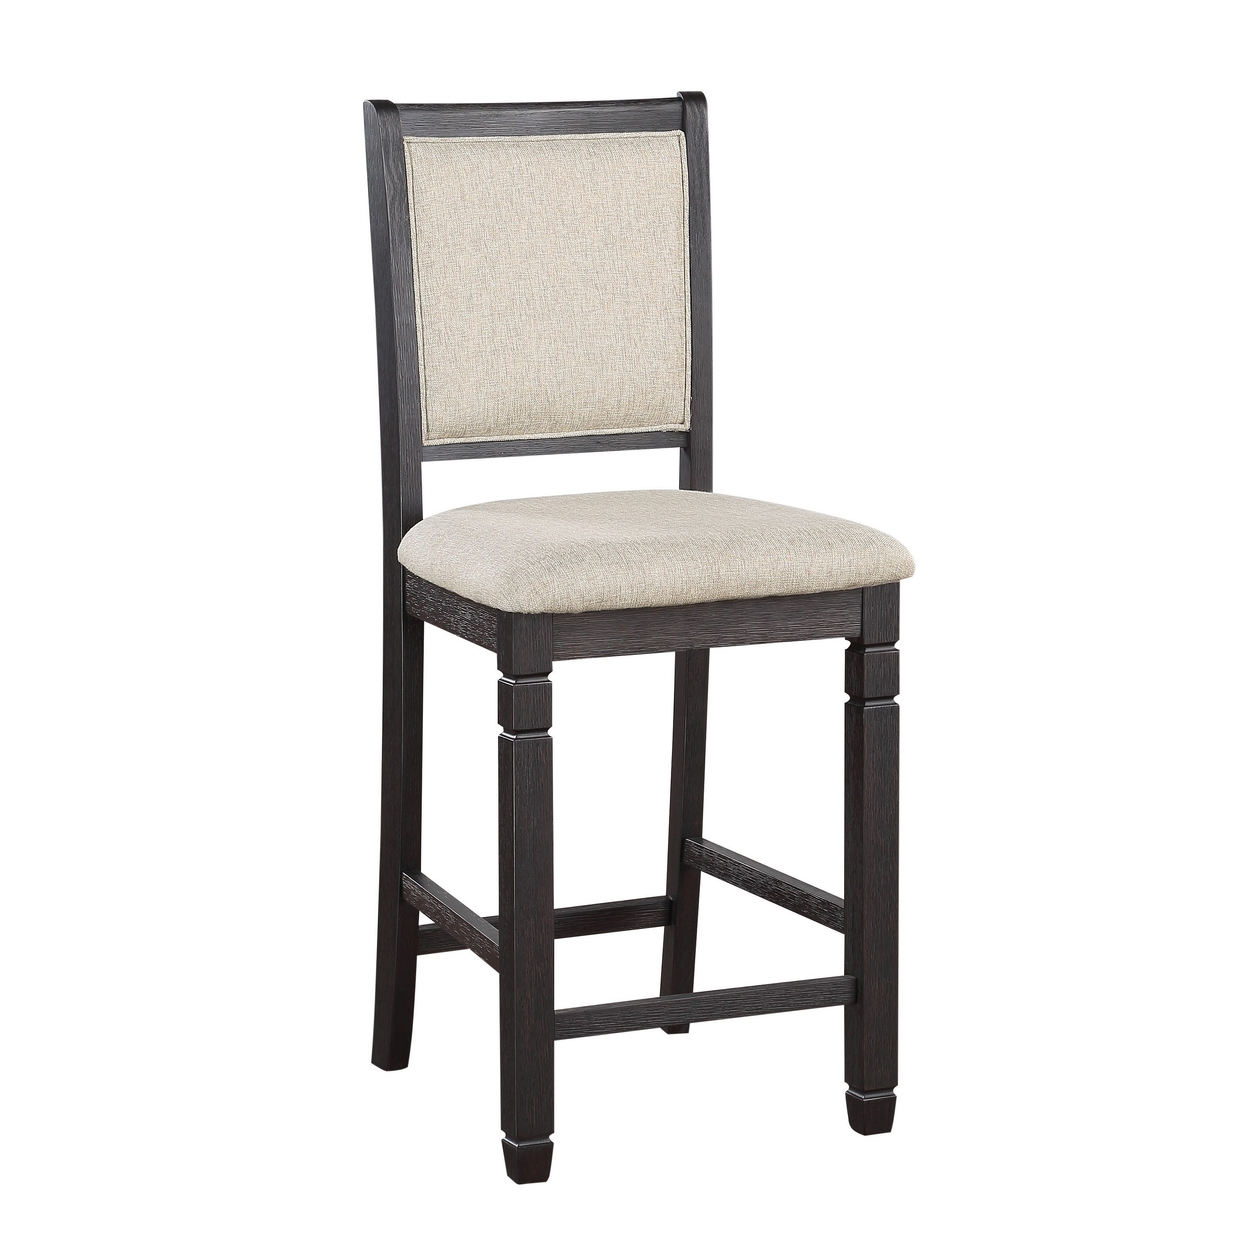 Anji 26 Inch Counter Chair, Jet Black Wood Frame, Piped Stitching, Beige- Saltoro Sherpi